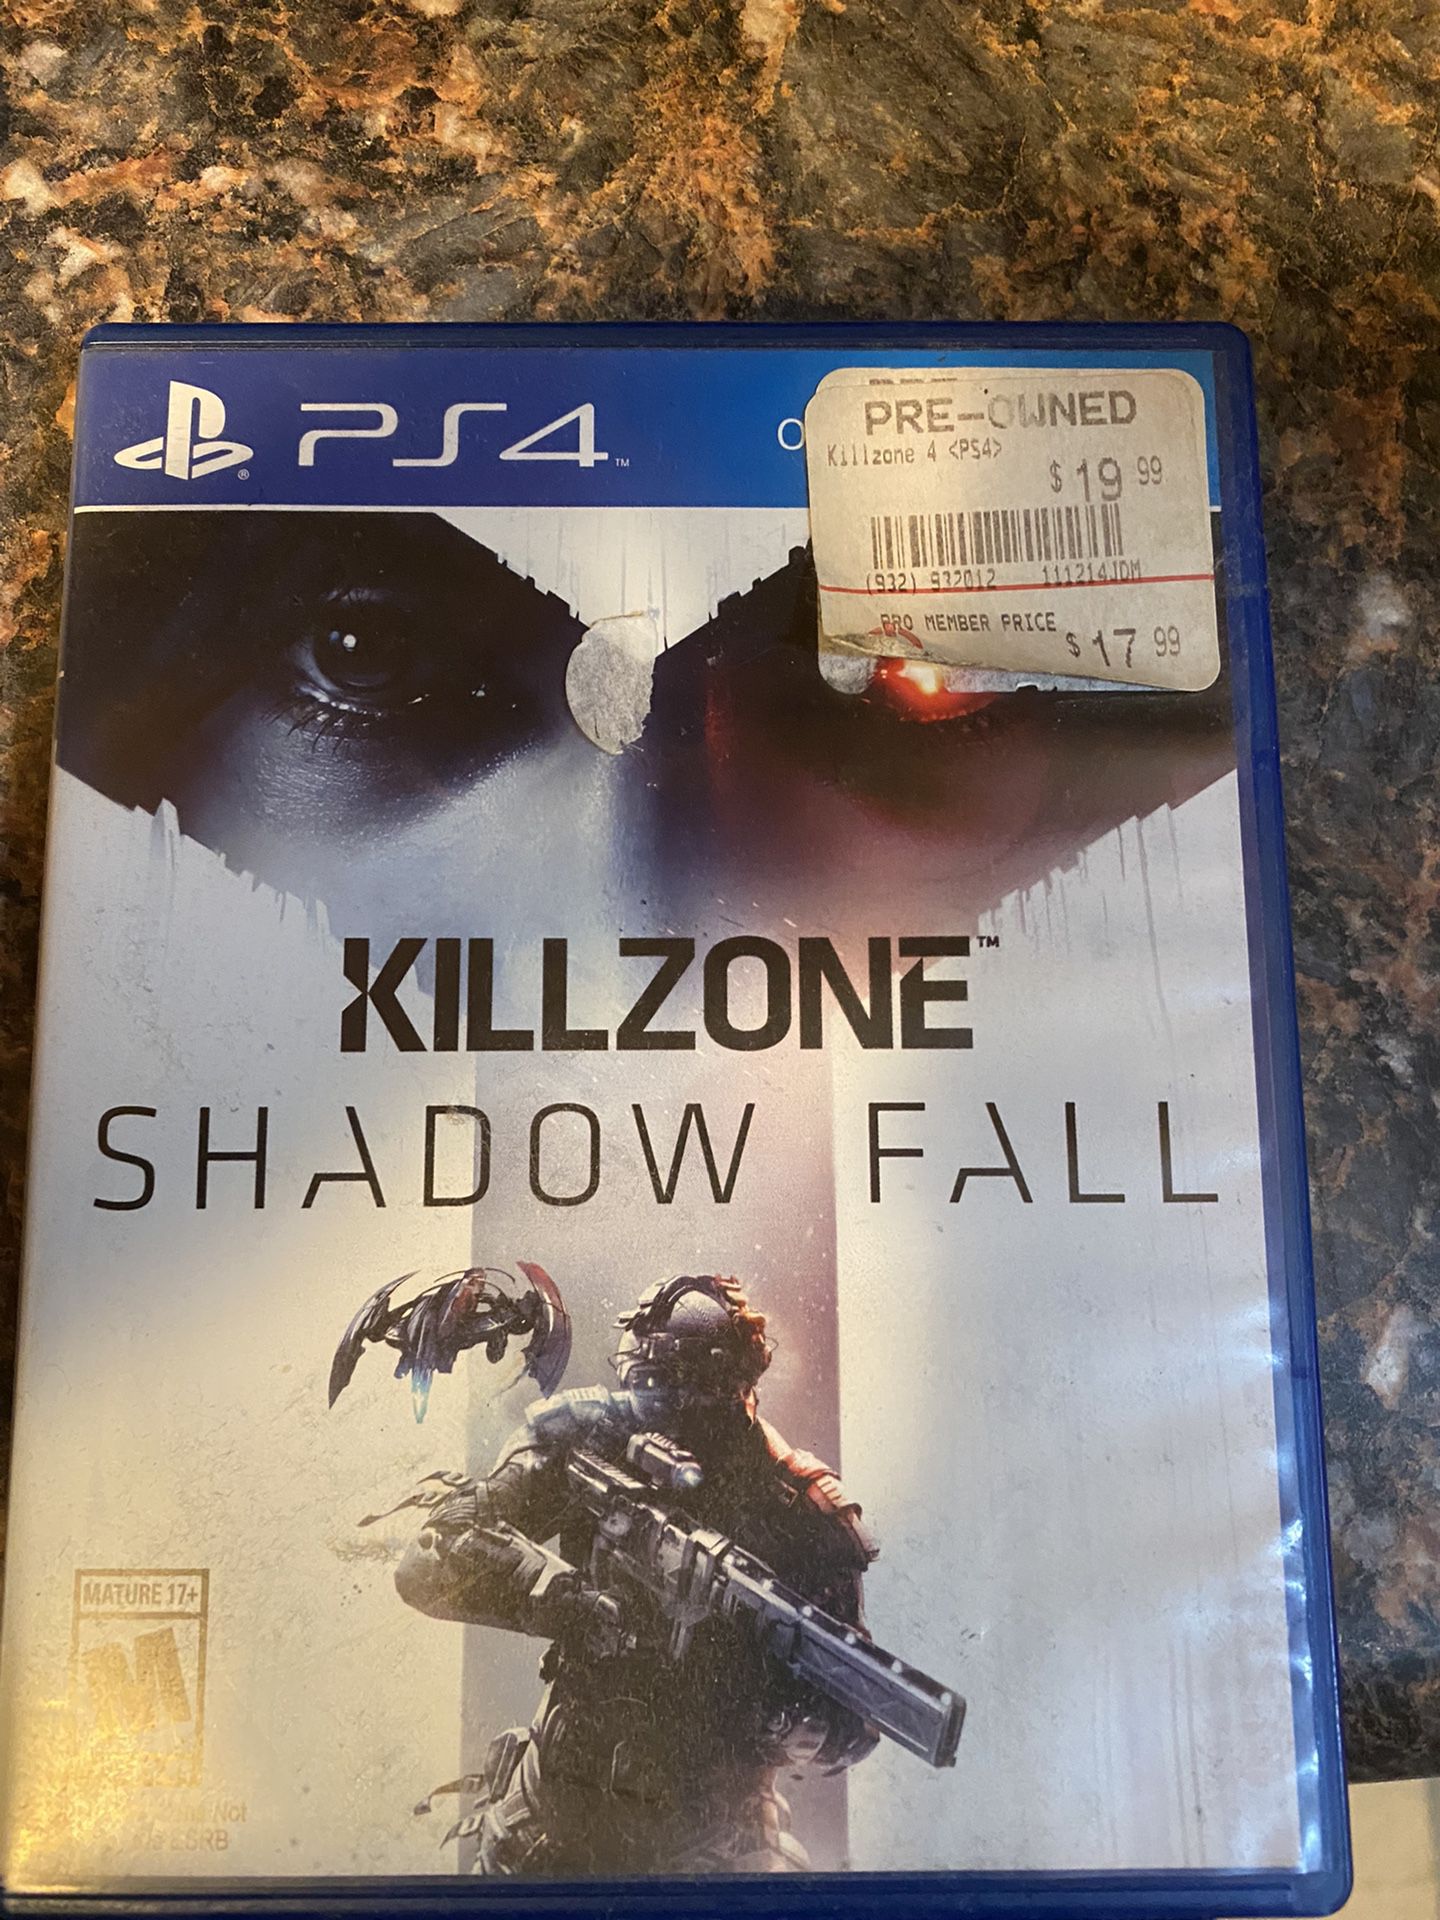 Kill zone Shadow Fall PS4 Game